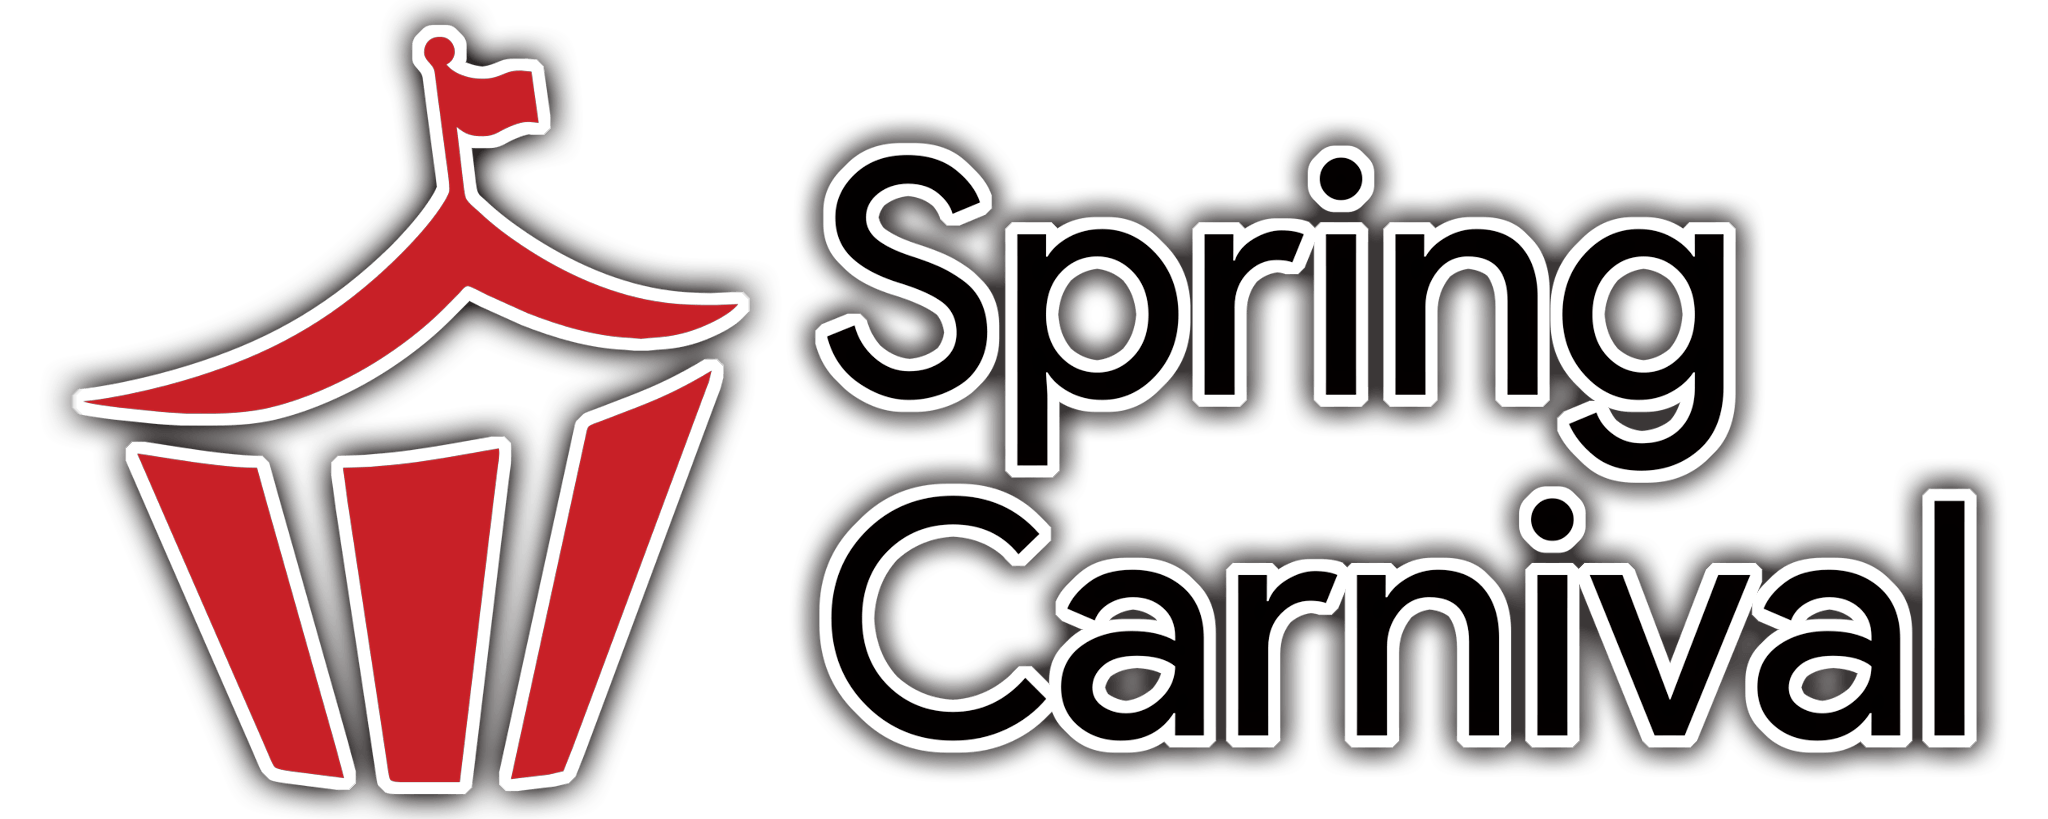 Carnegie Mellon Logo - Carnegie Mellon Spring Carnival